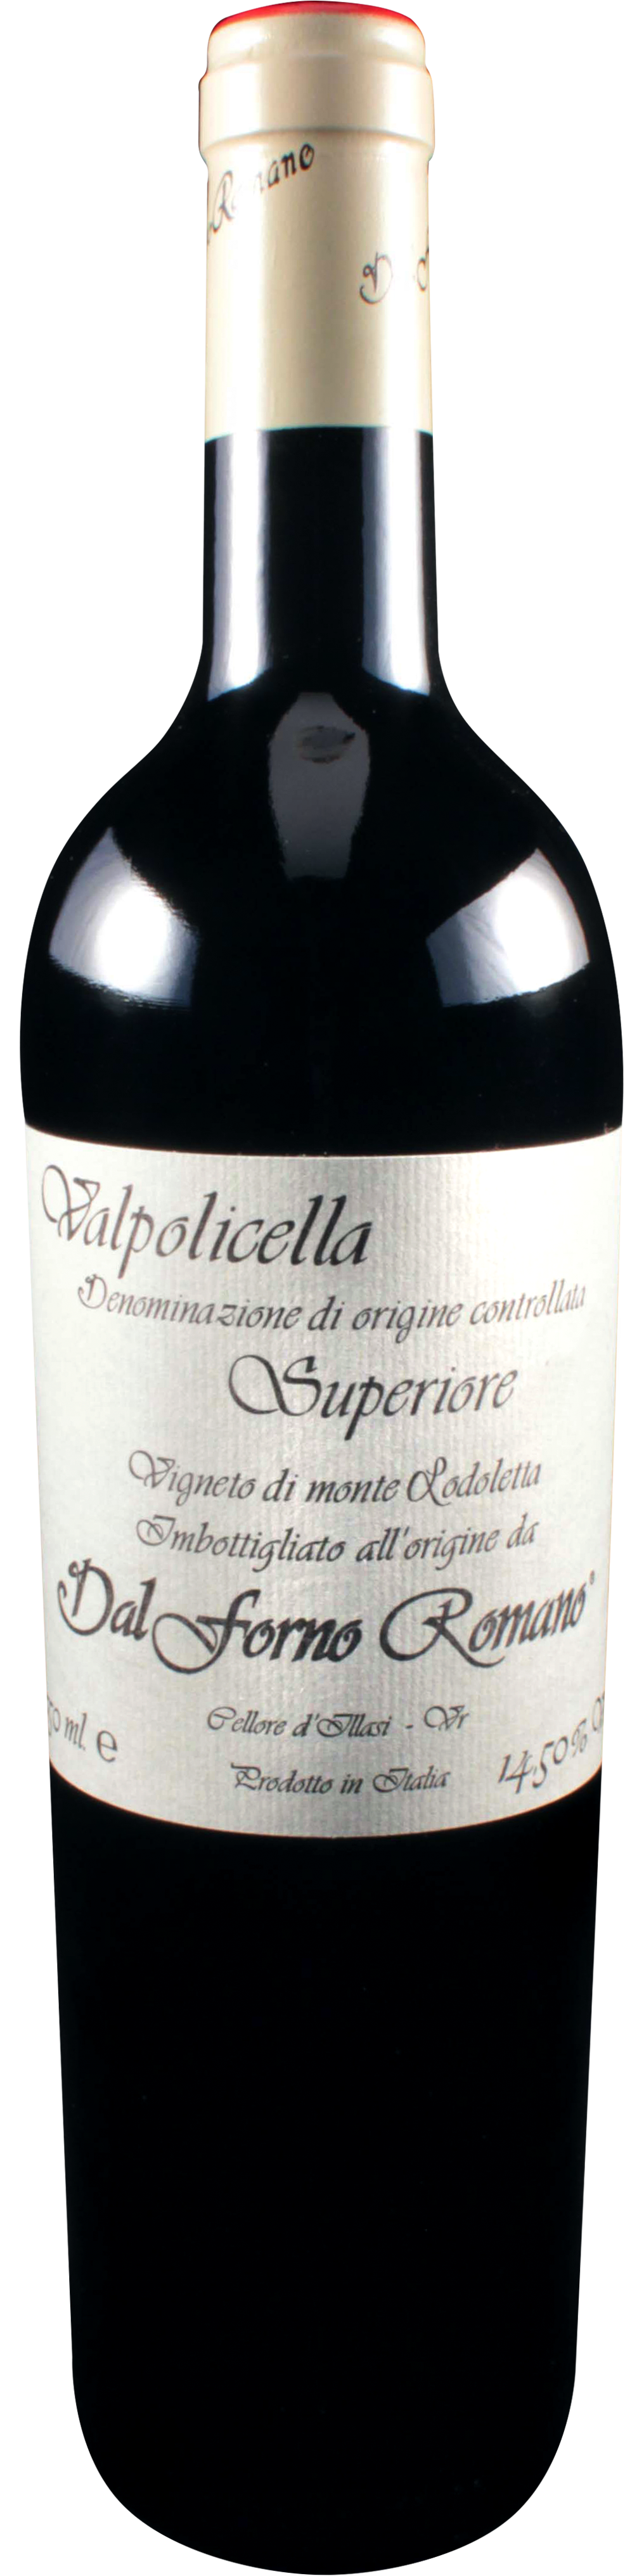 Bottle shot of 2011 Valpolicella Superiore